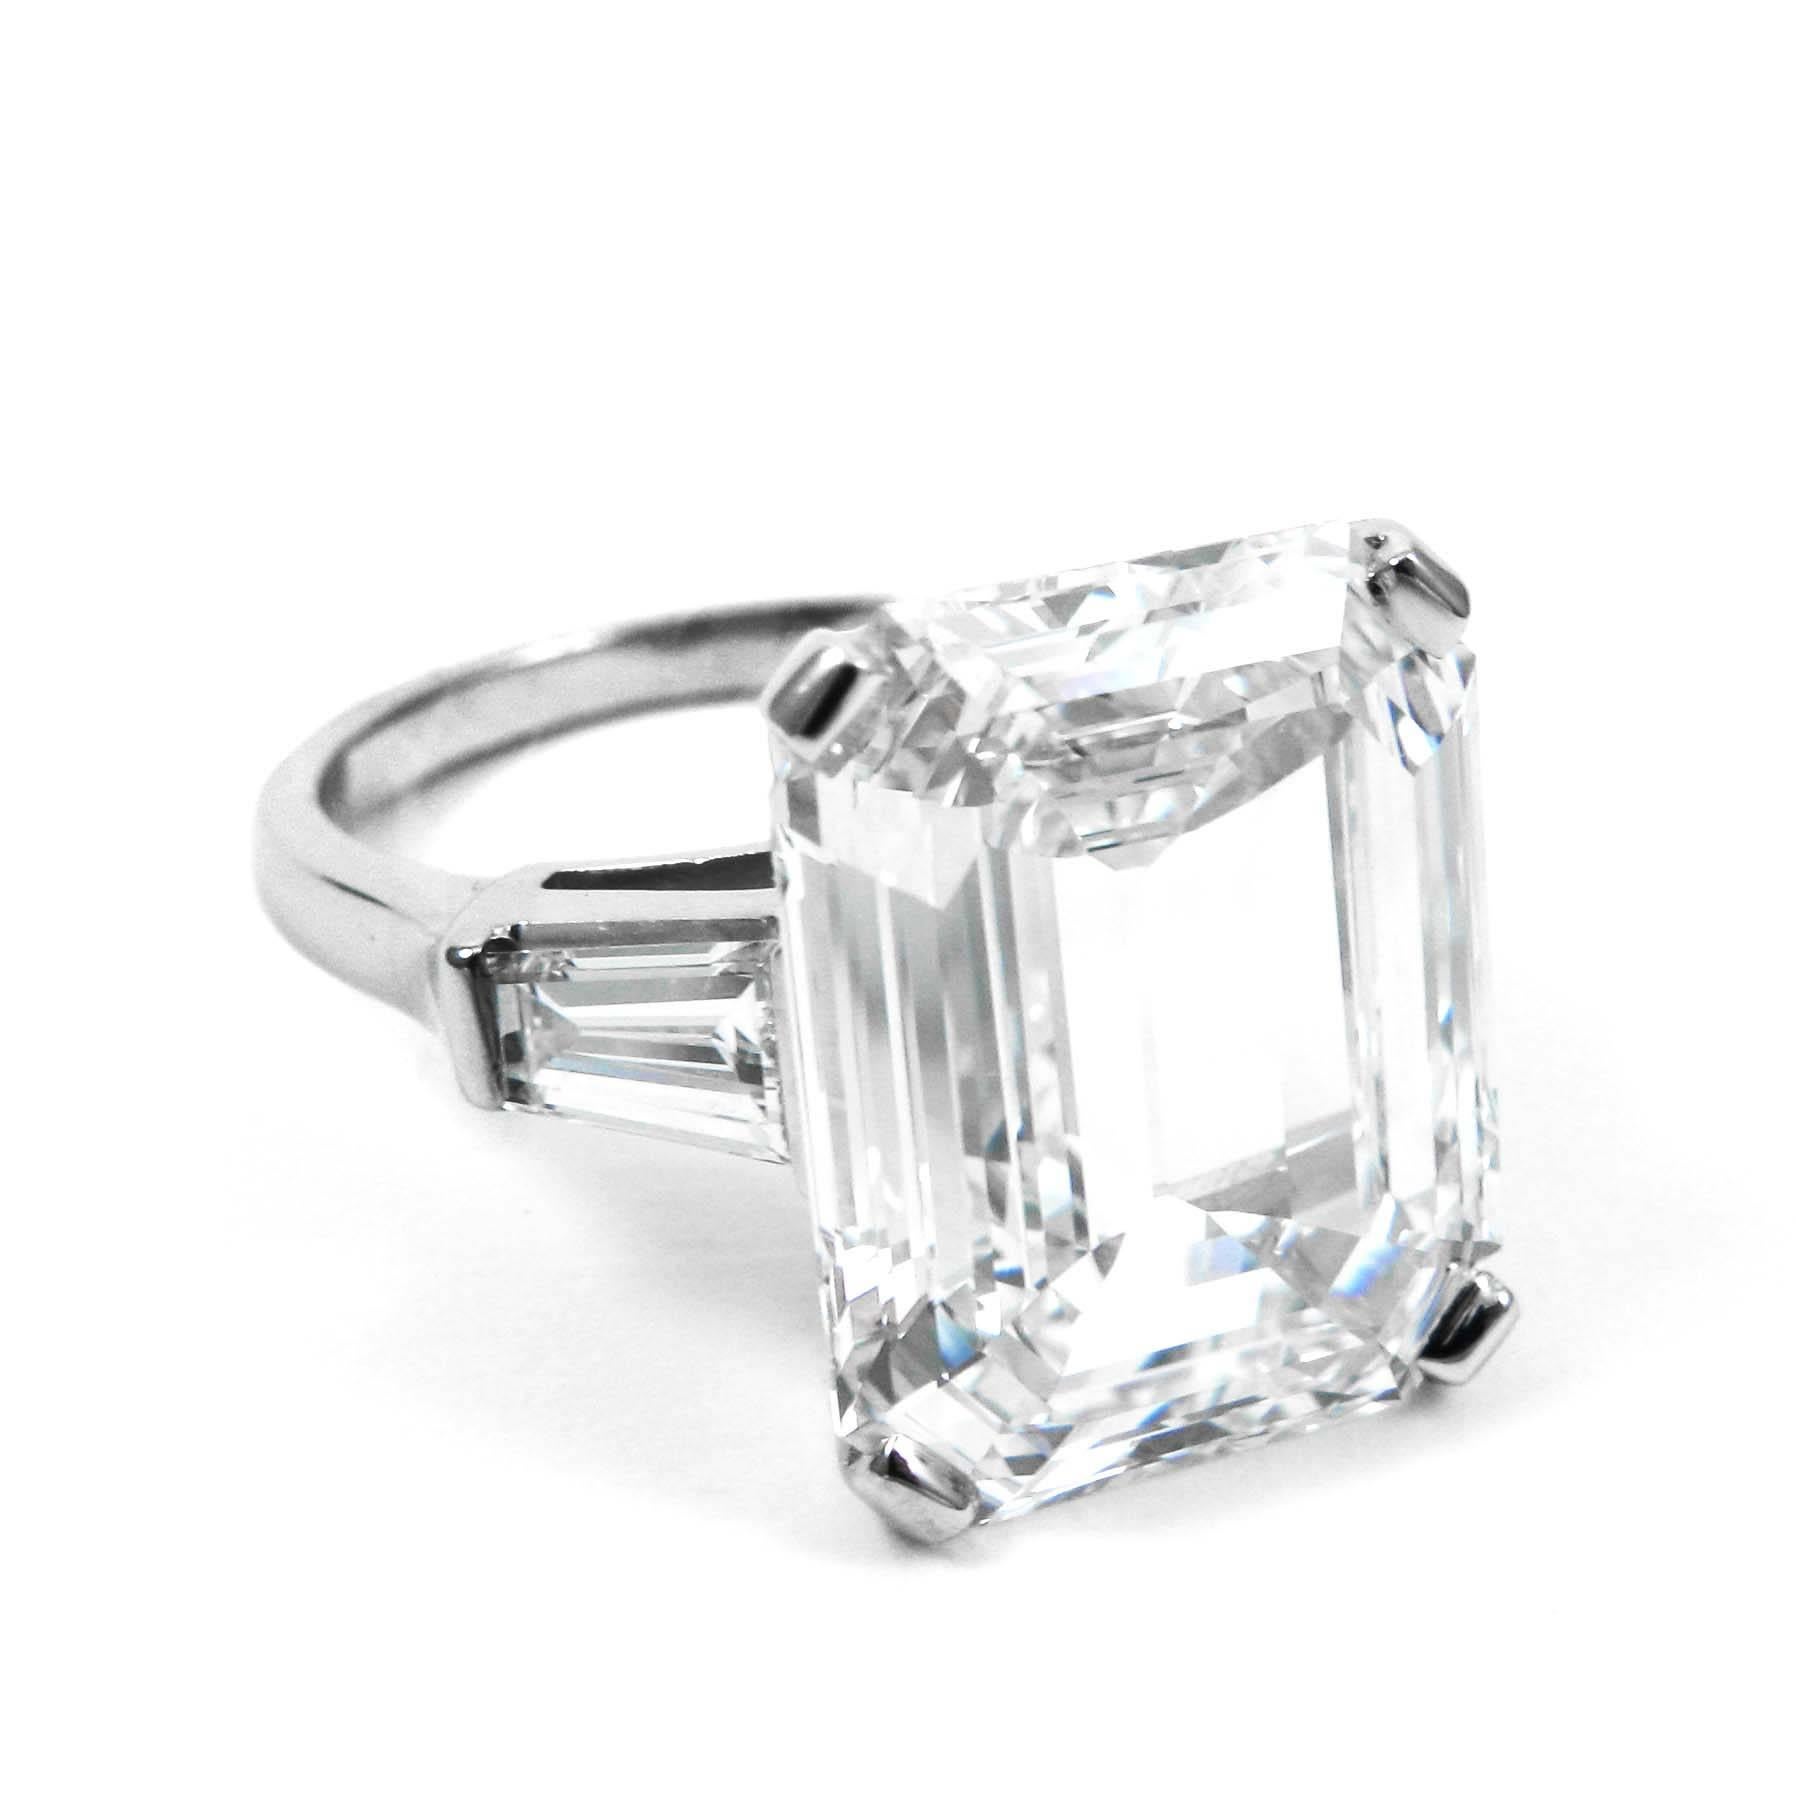 Women's or Men's GIA Certified 7.57 Carat Emerald Cut G VS1 Diamond Platinum Ring